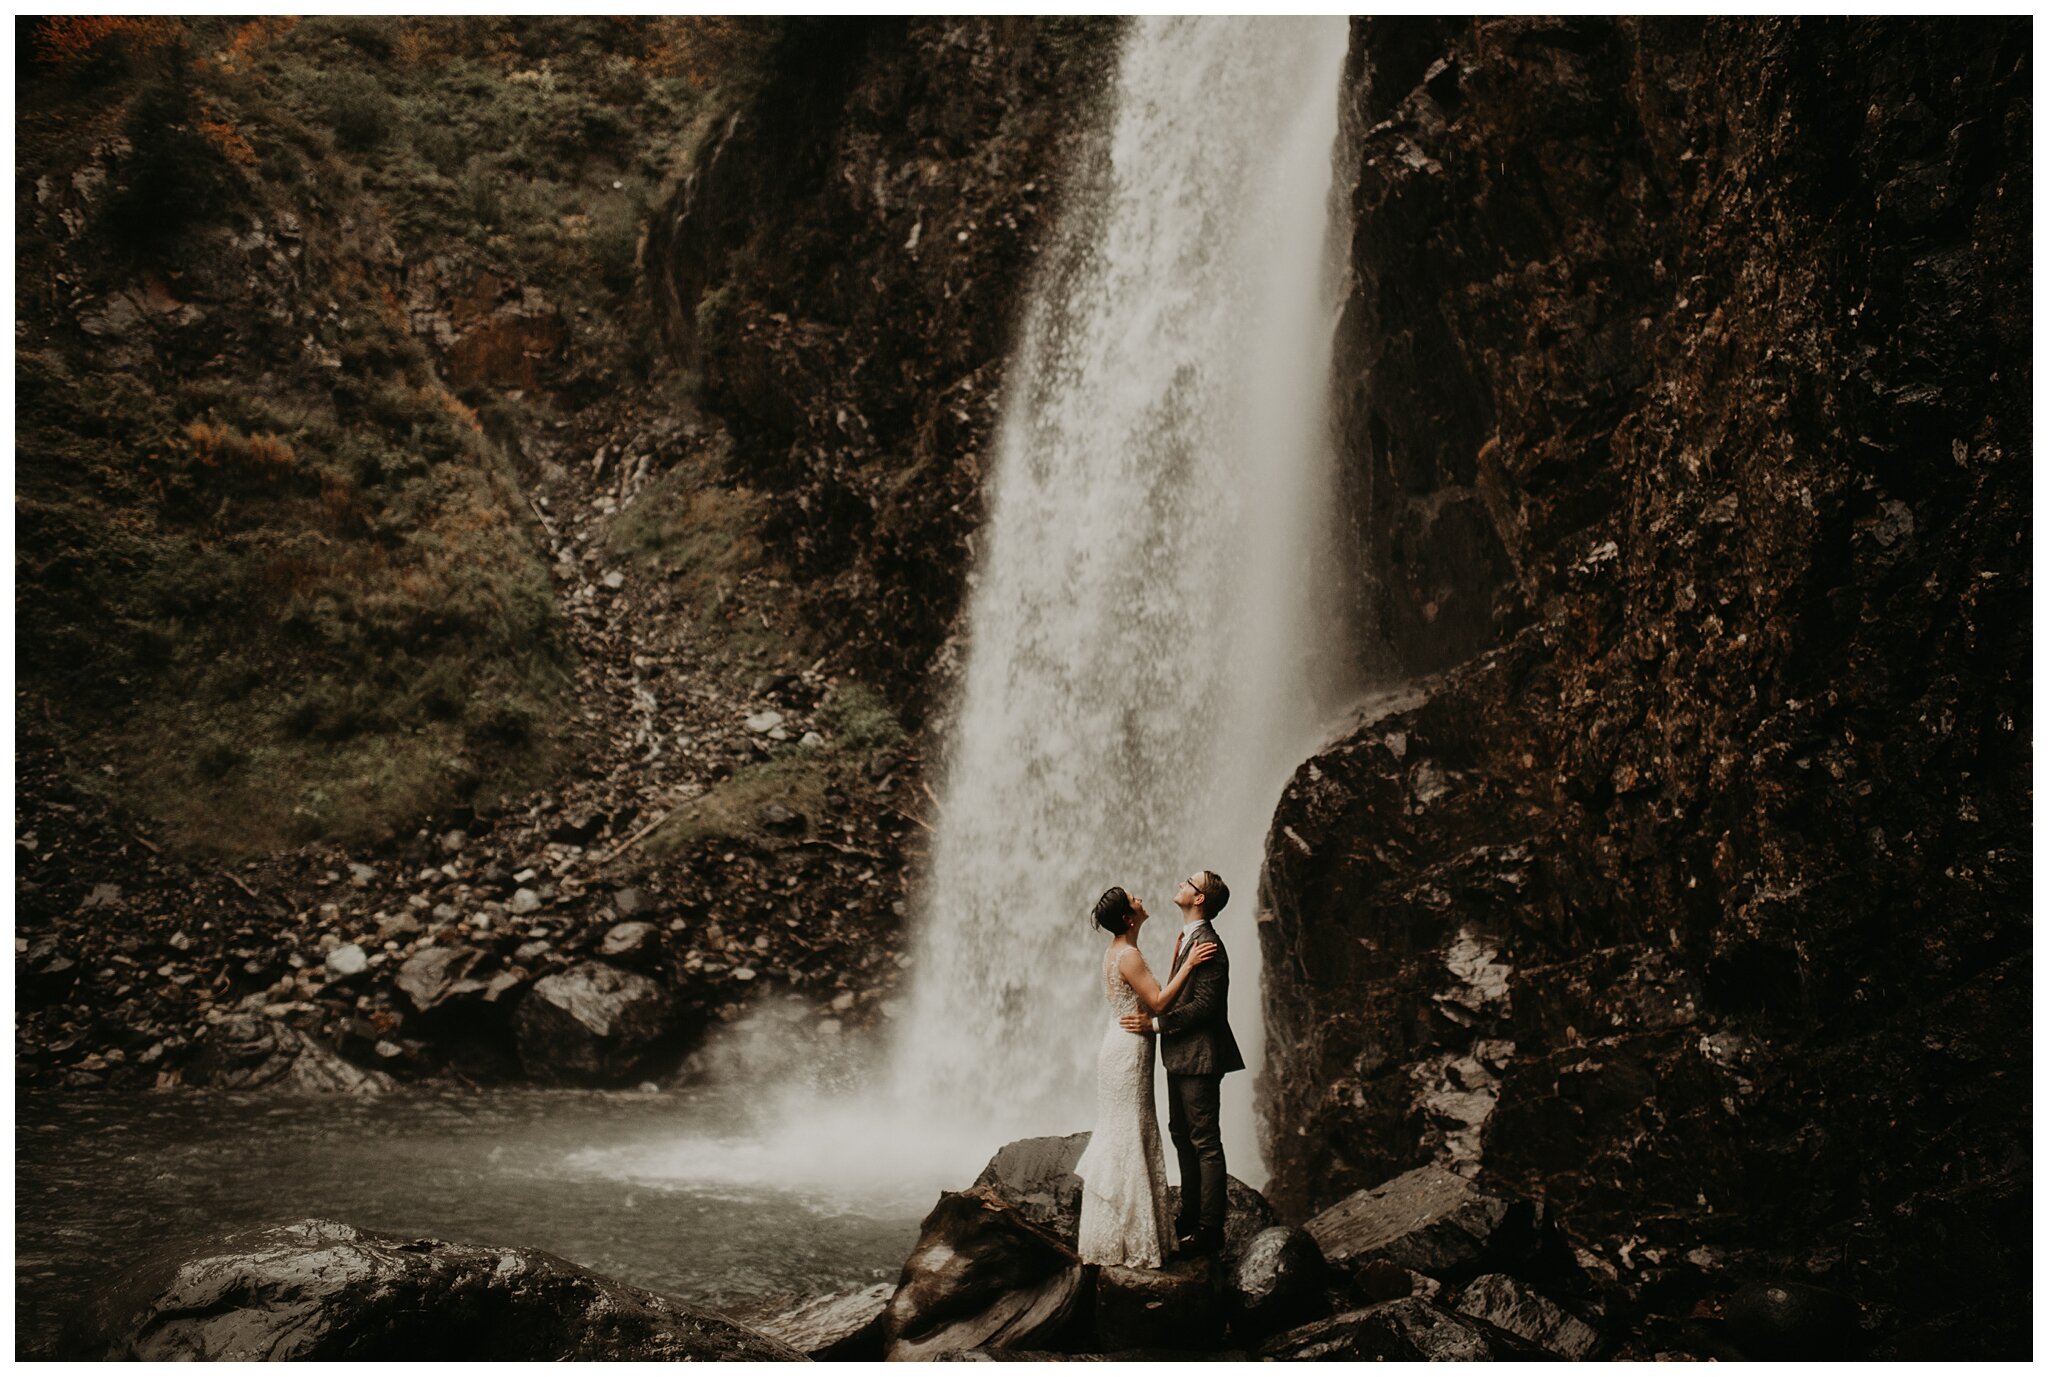 Layla + Kodiak Wedding Portraits - Franklin Falls, Snoqualmie, WA - Kamra Fuller Photography